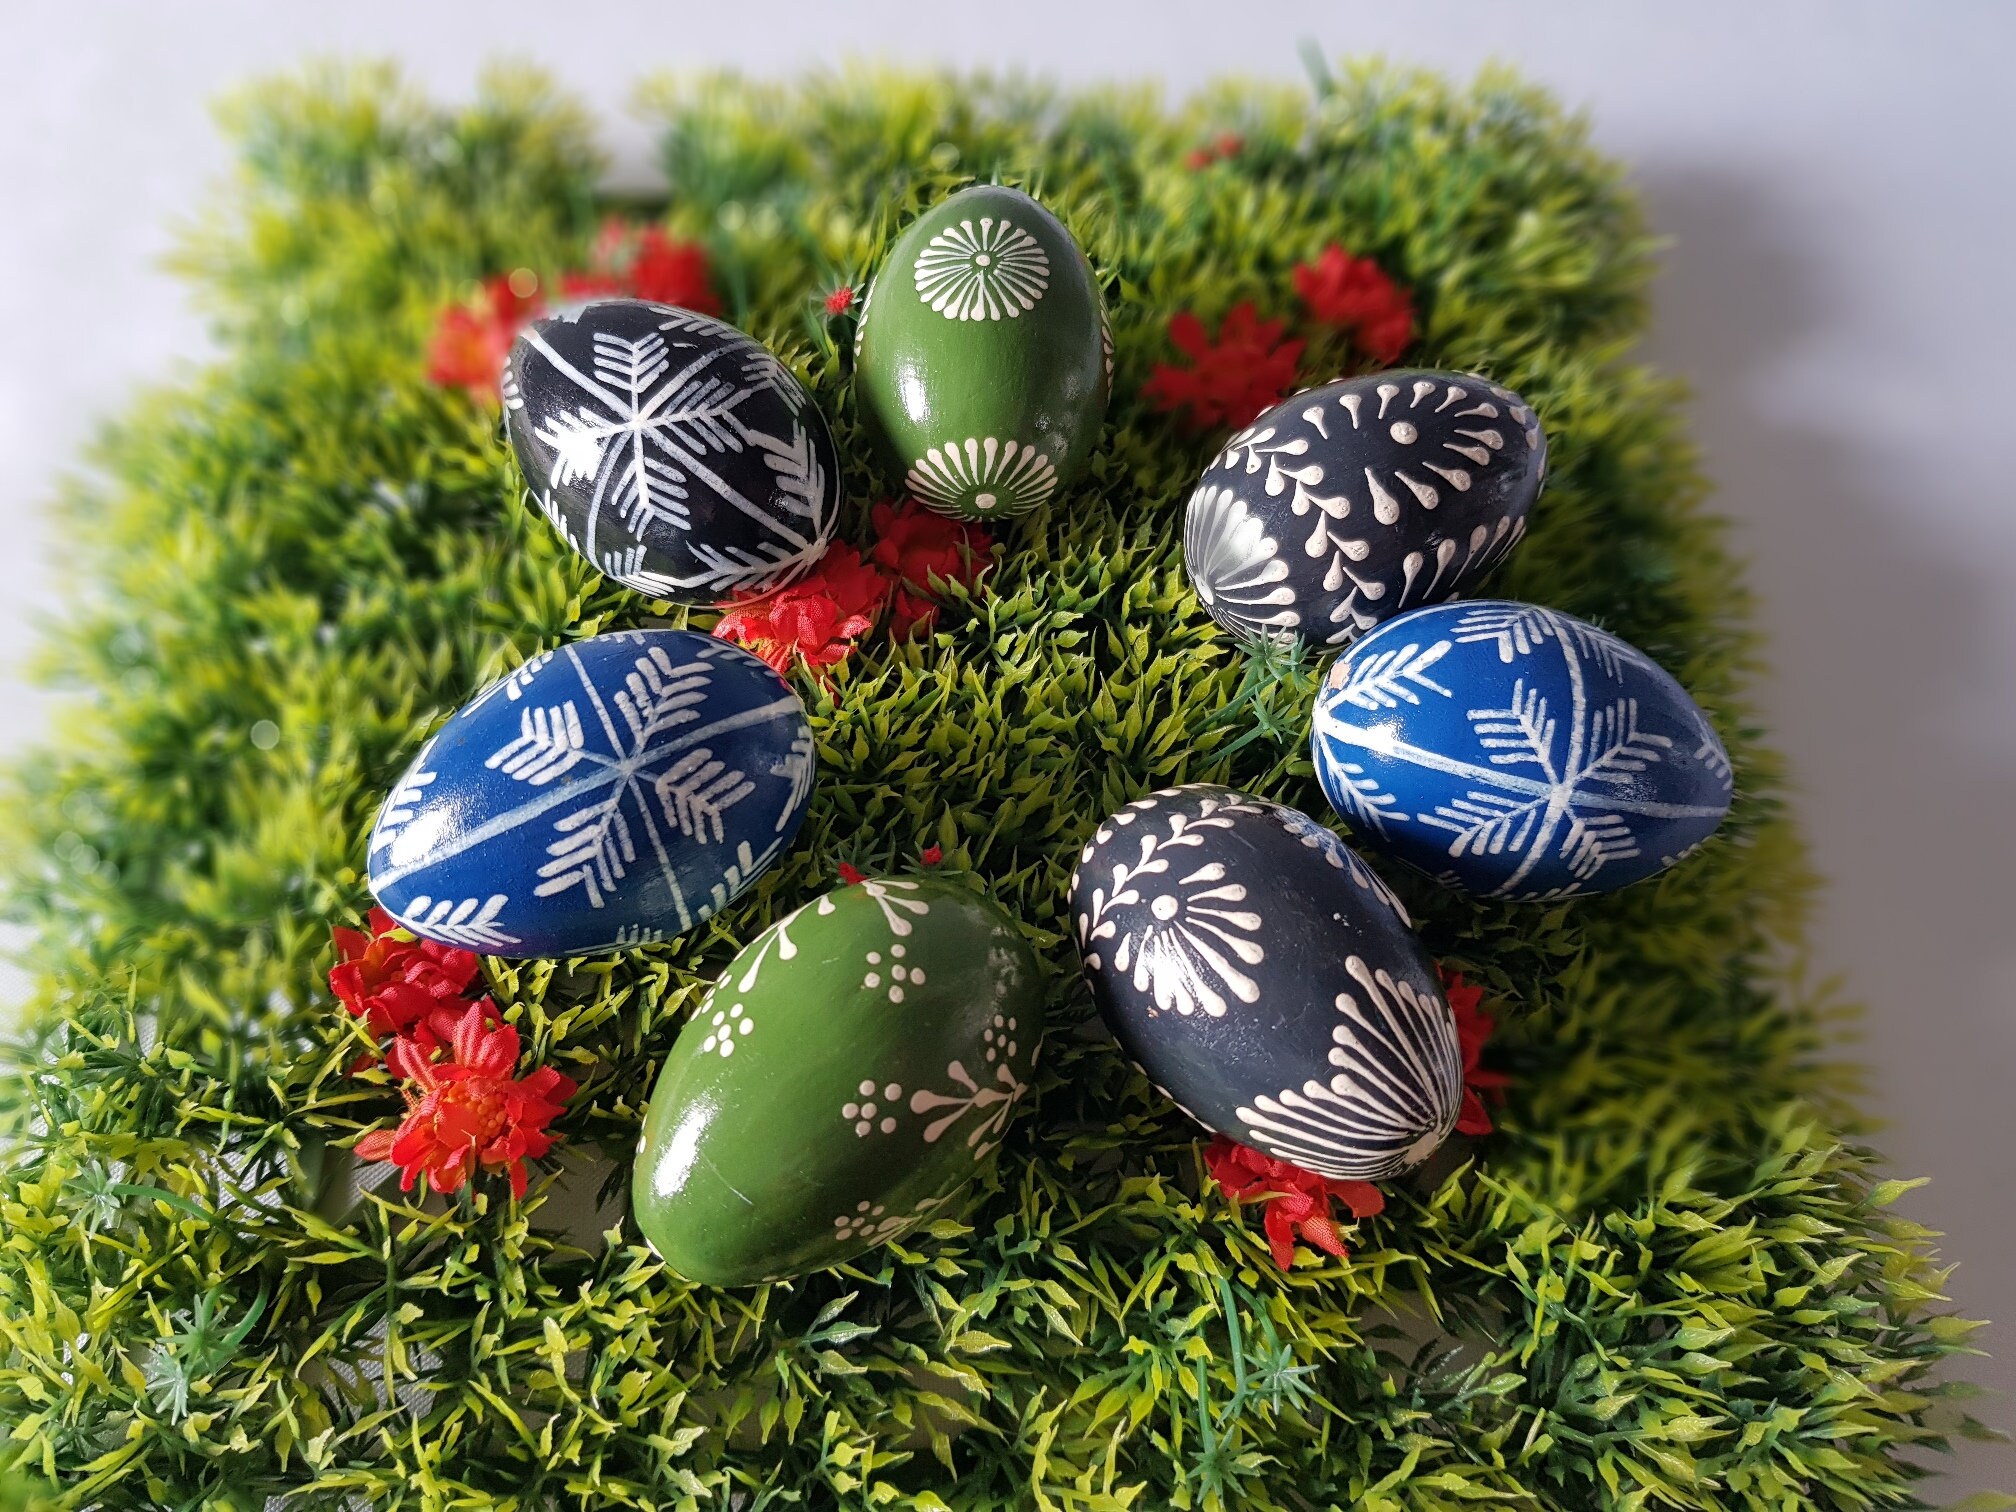 6 Wooden Eggs pysanky Easter Egg wooden Eggs-color blue-white 